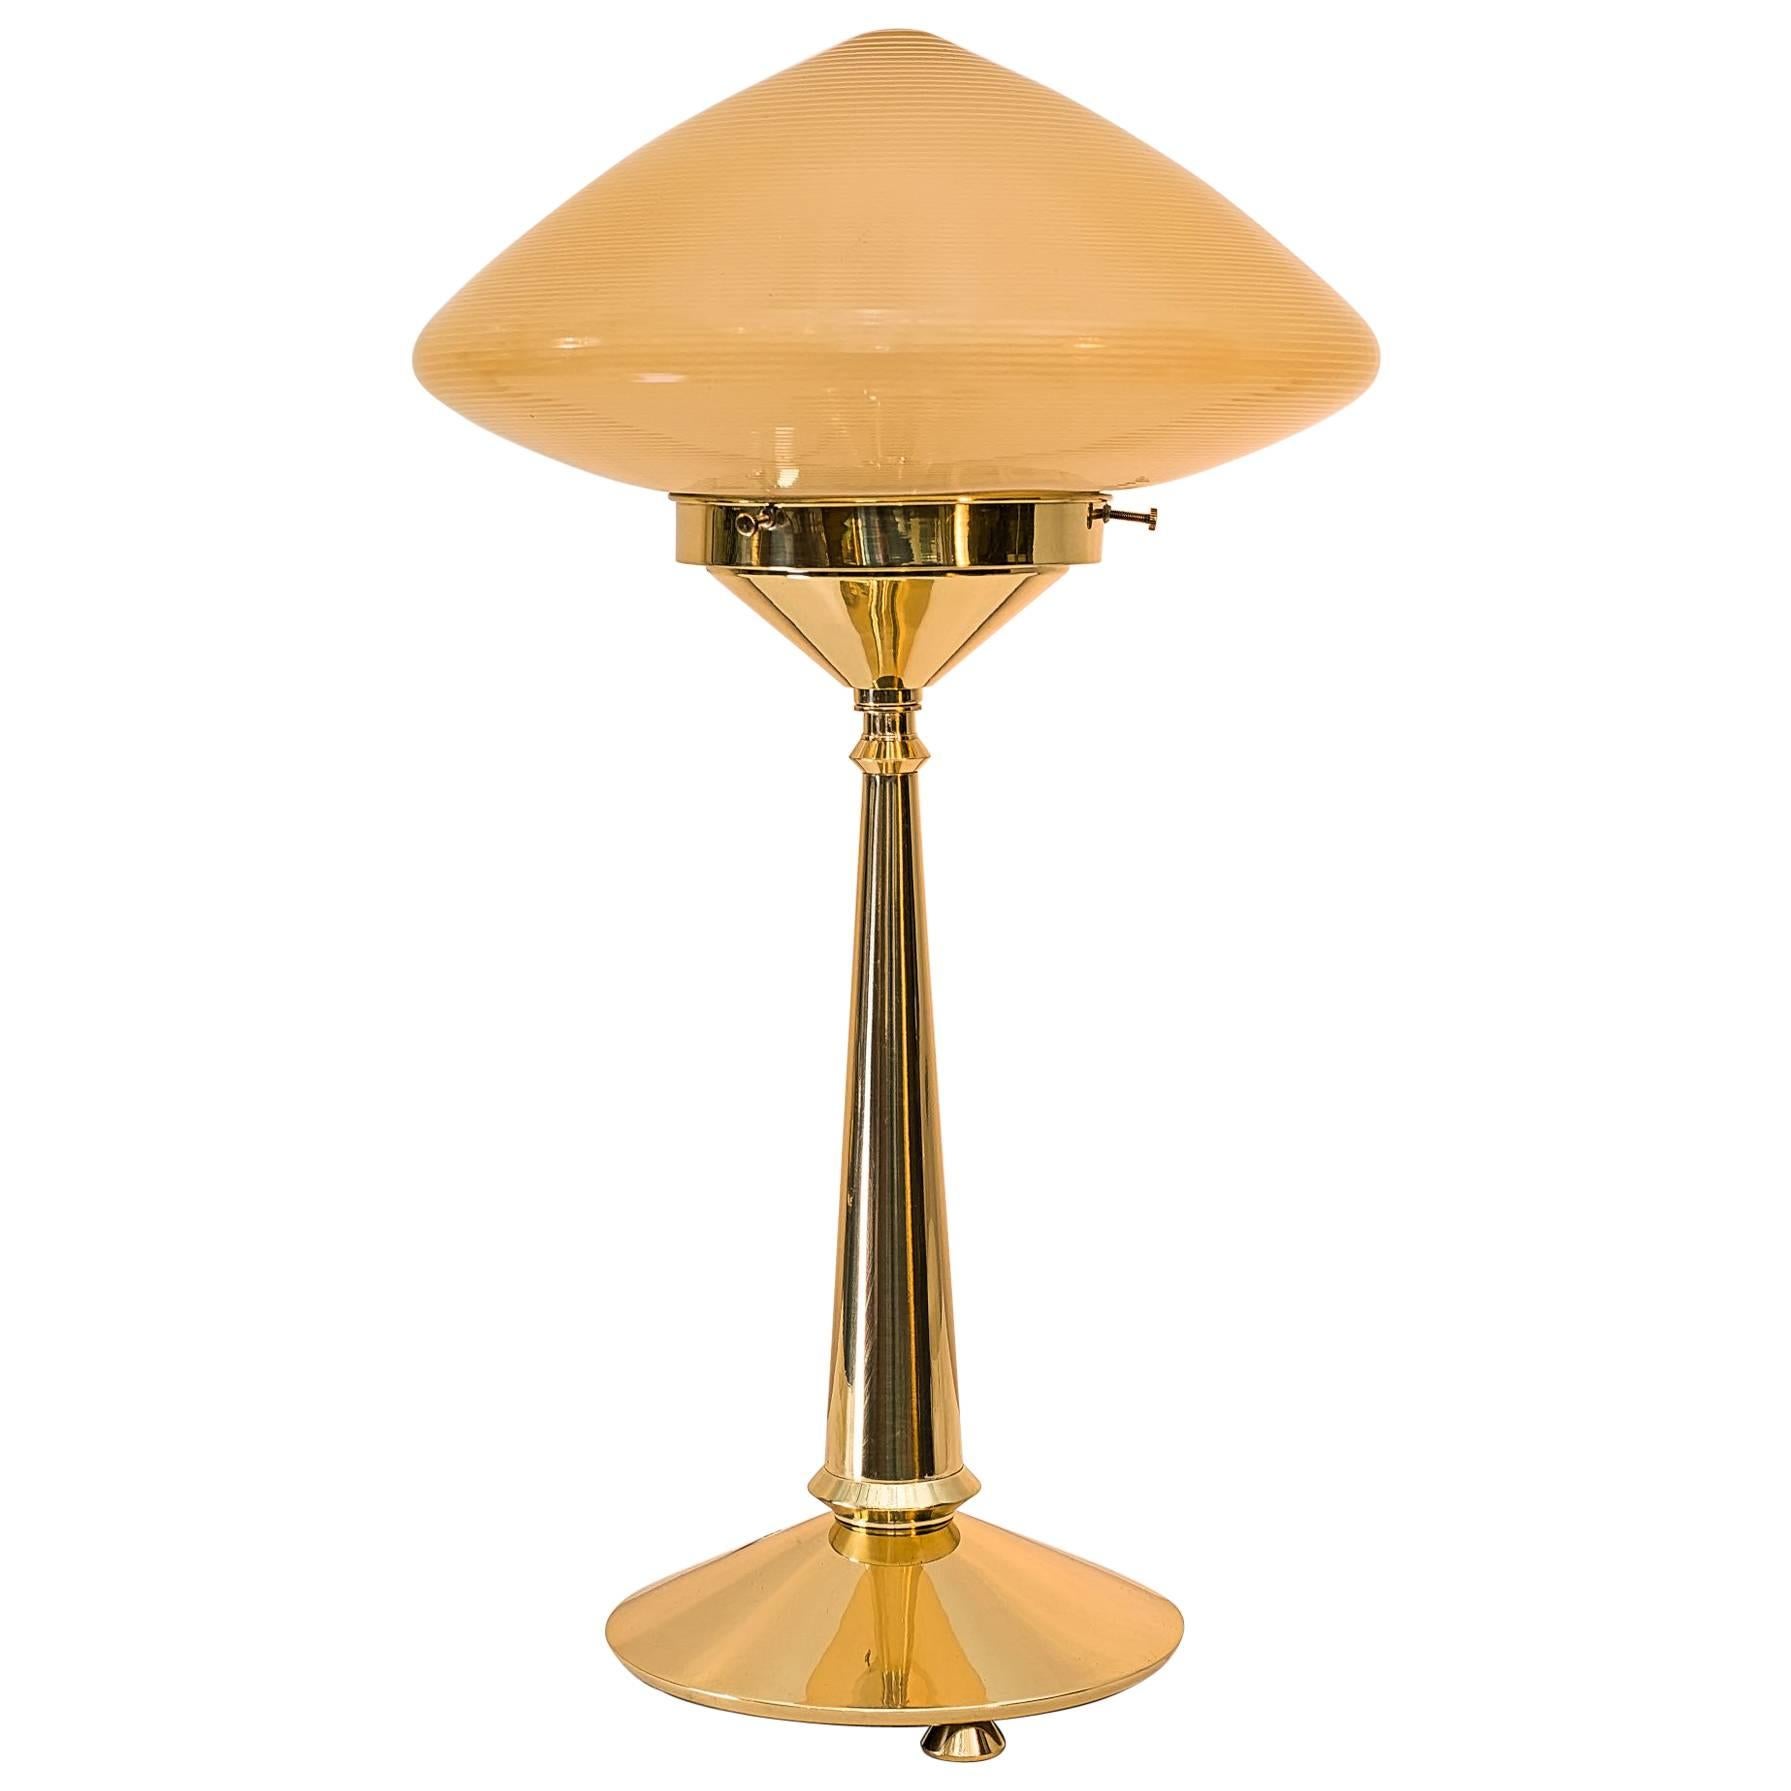 Beautiful Art Deco Table Lamp with Fantastic Original Glass Shade